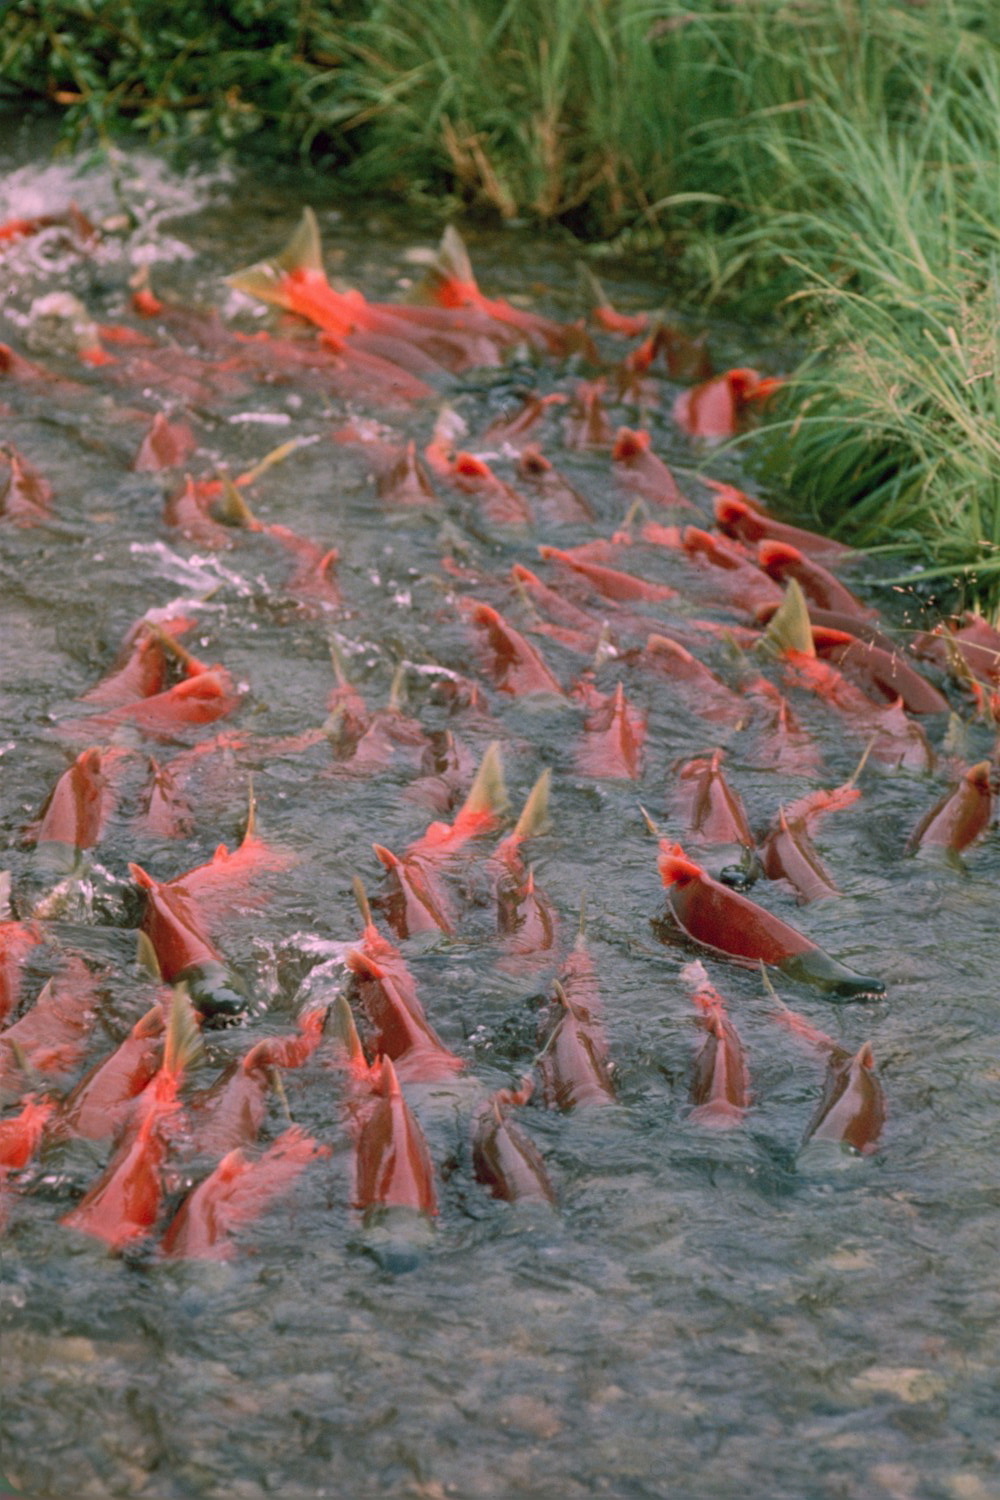 Red sockeye salmon fill a small stream